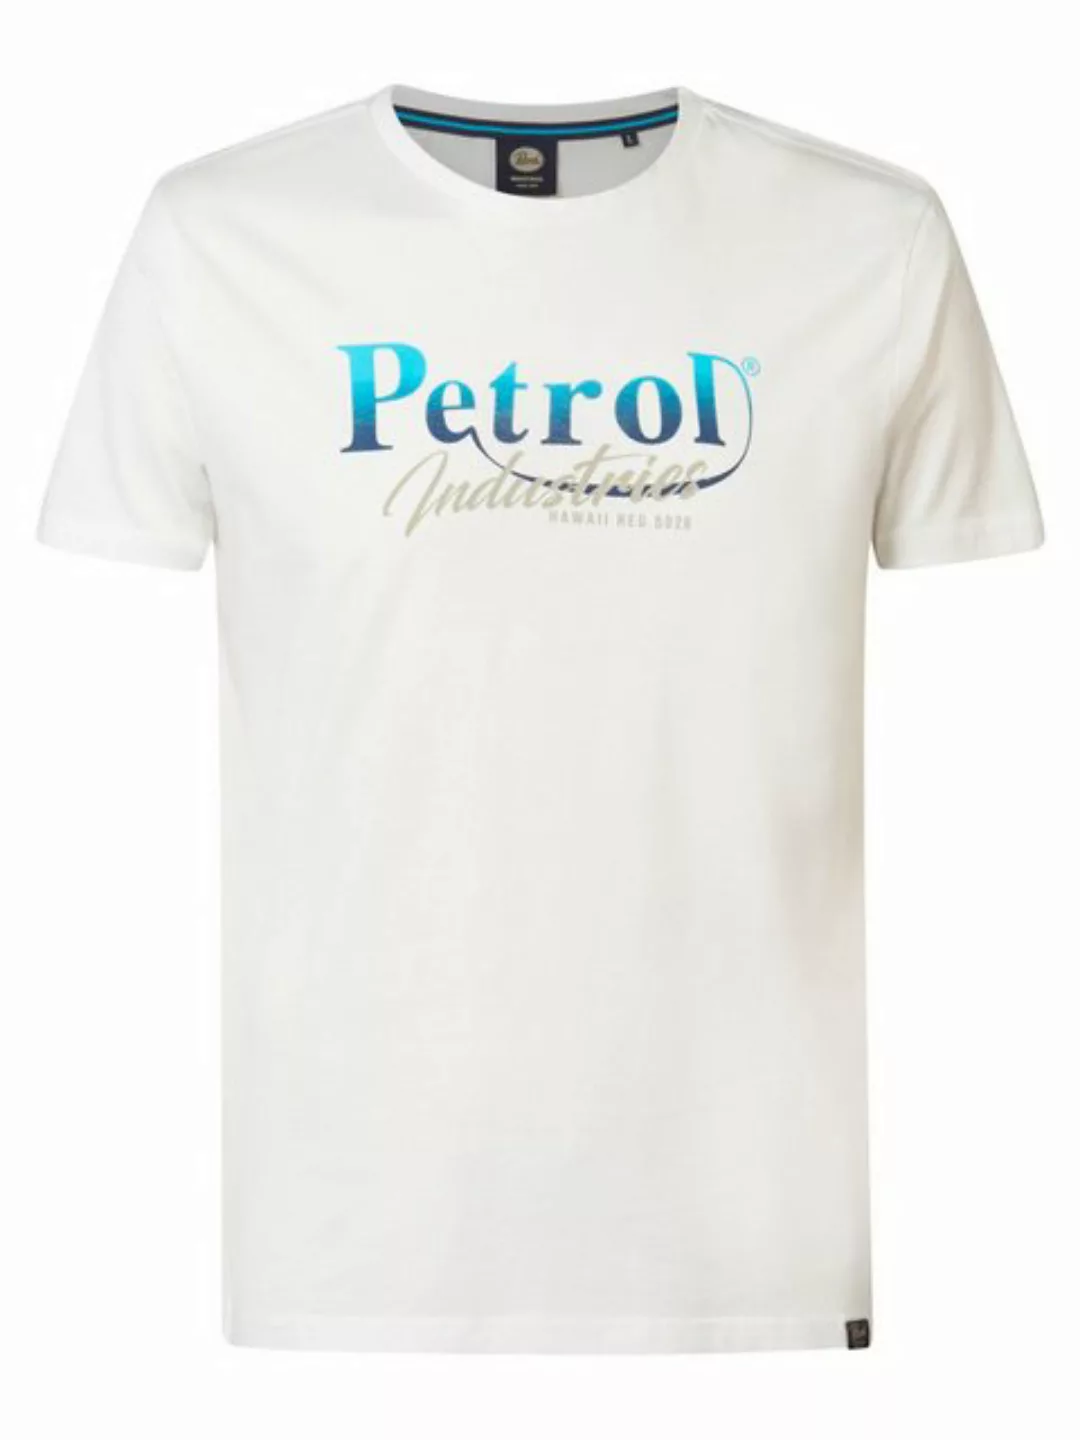 Petrol Industries T-Shirt - Shirt - Kurzarmshirt - T-Shirt mit Aufdruck Sum günstig online kaufen